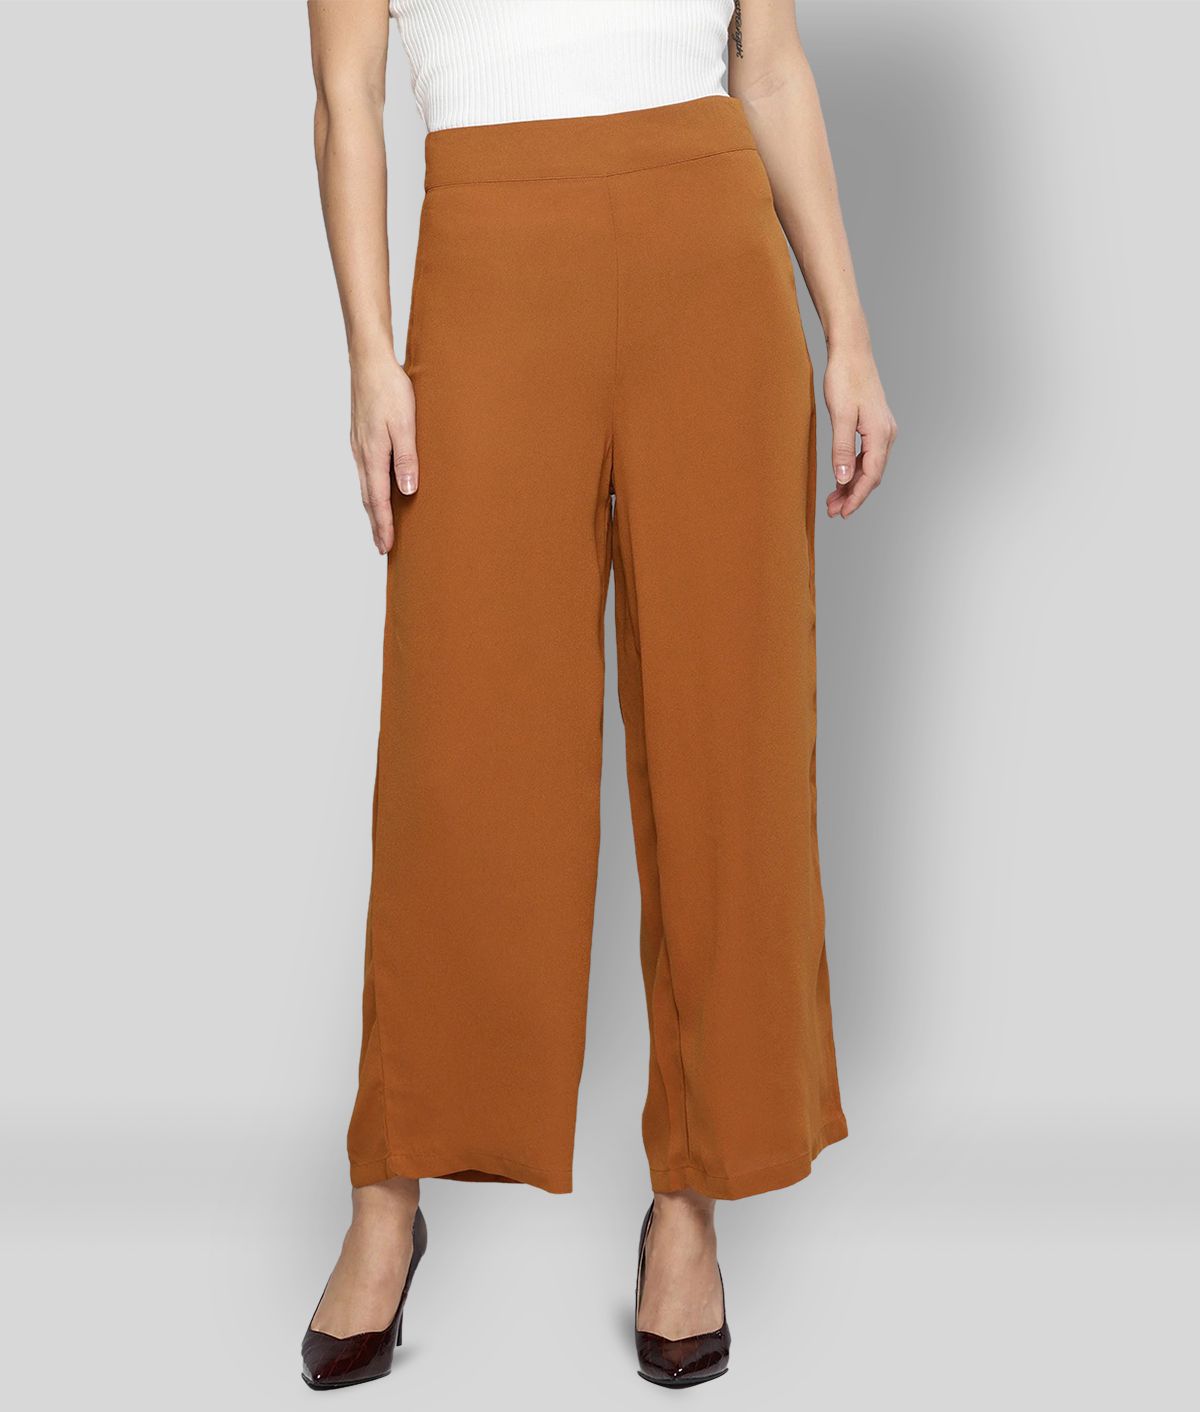     			Rare - Tan Polyester Regular Fit Women's Casual Pants  ( Pack of 1 )